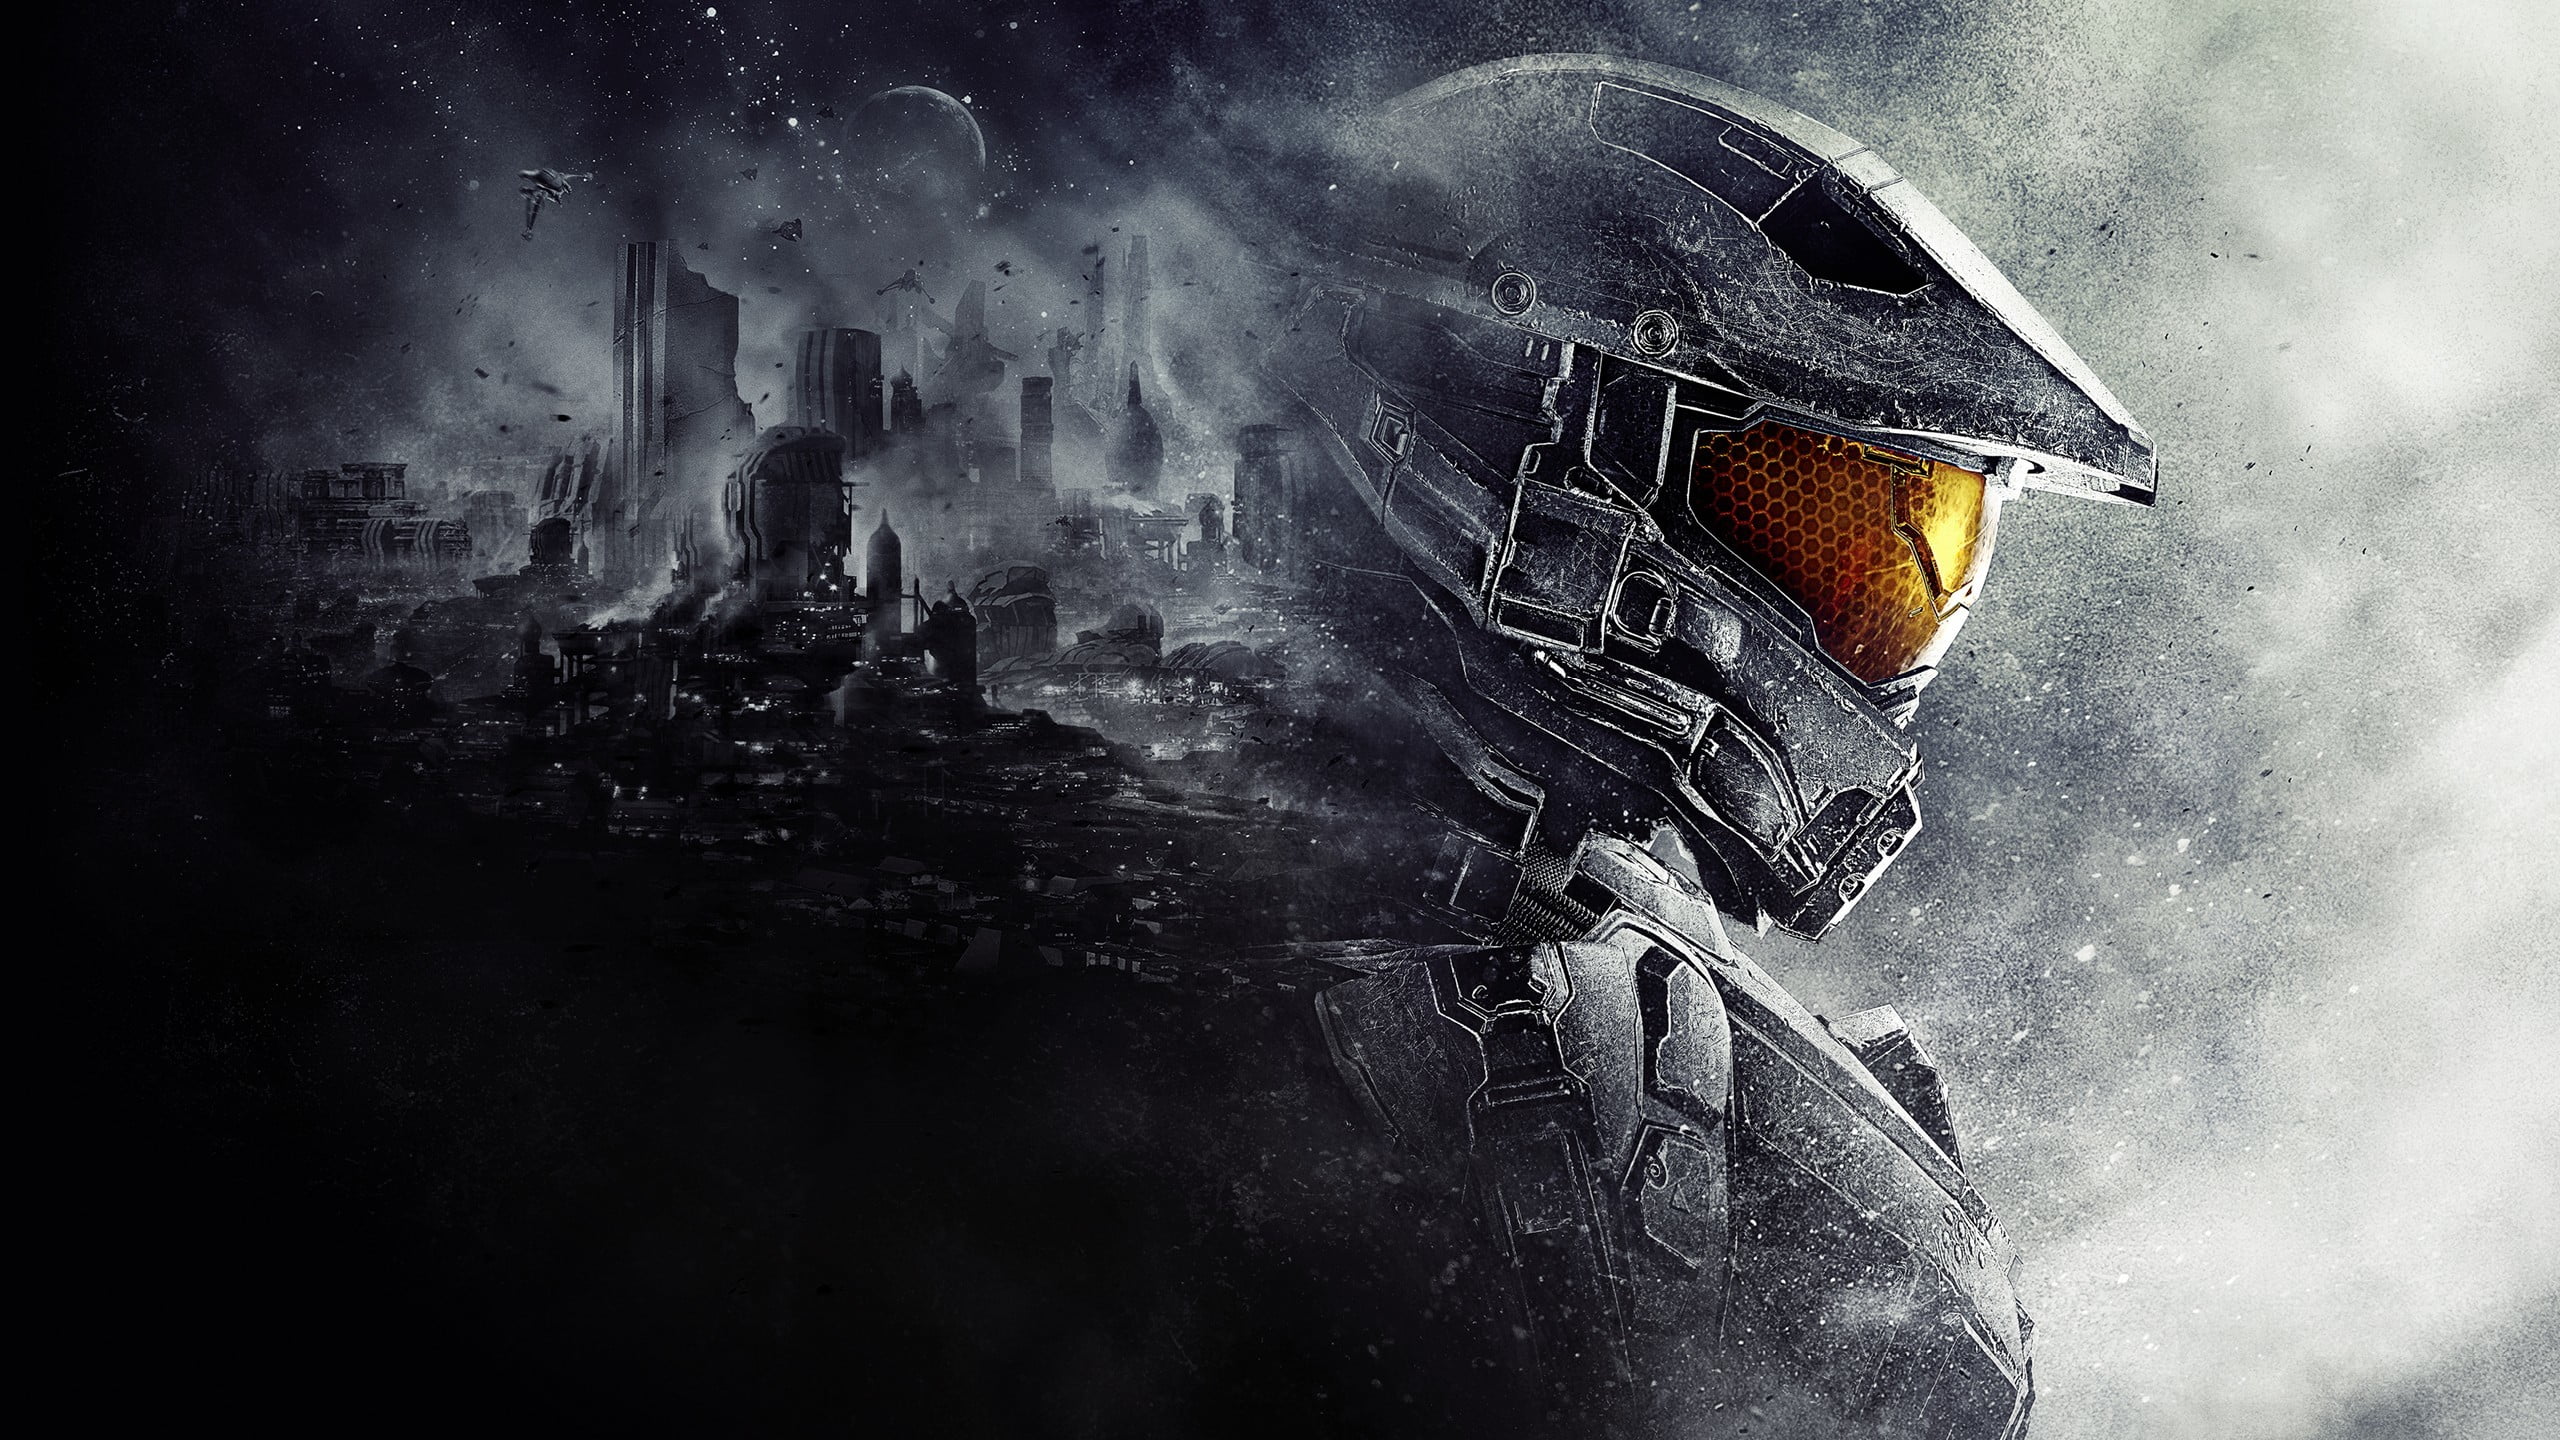 Hình game Halo 3D sắc nét